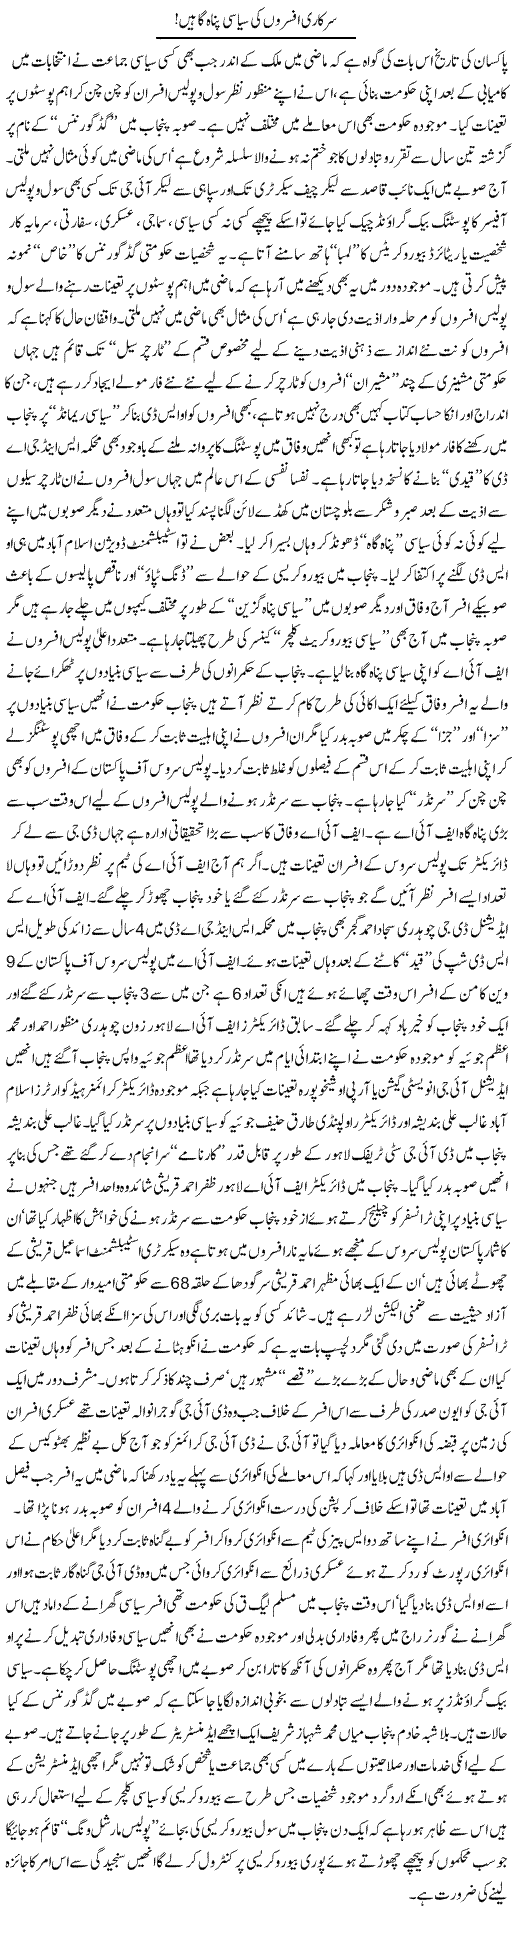 Sarkari Afsar Express Column Khalid Rasheed 4 August 2010